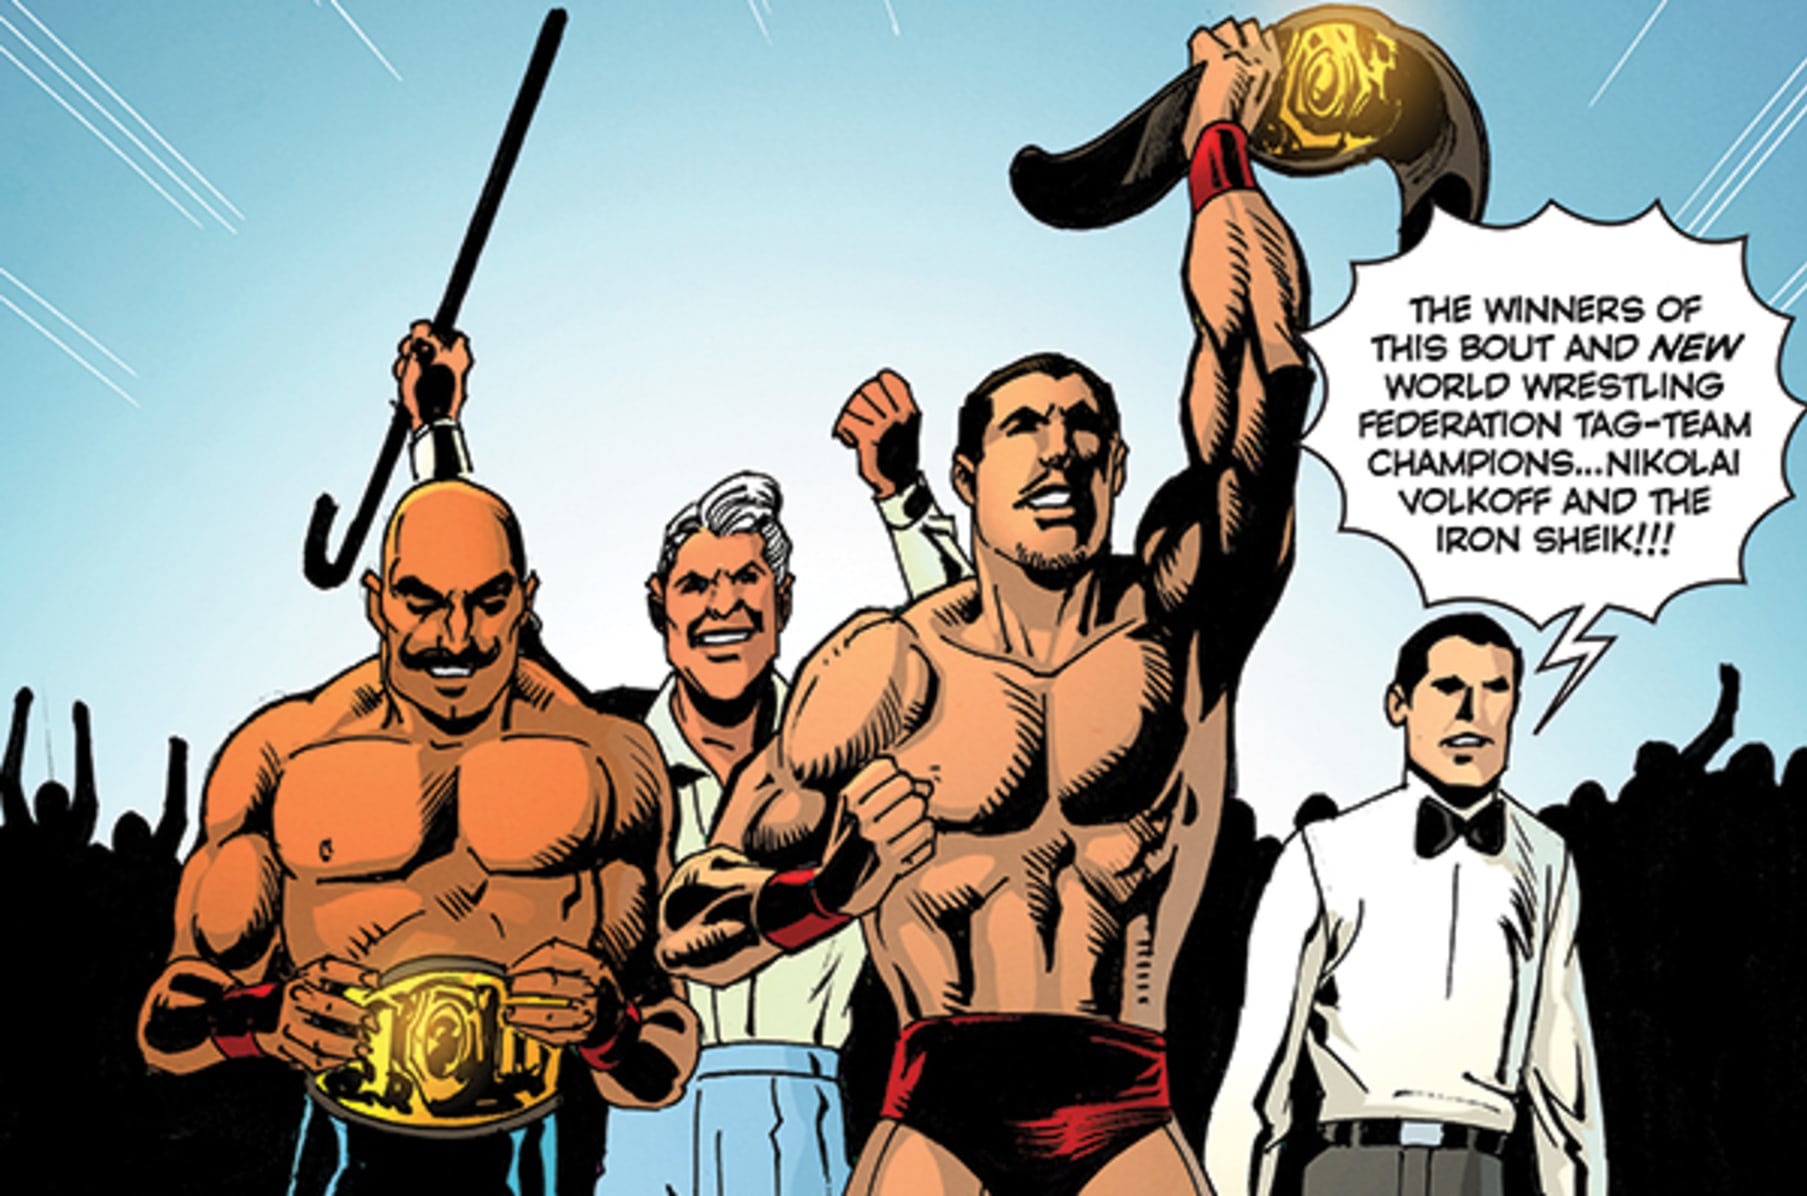 Grand Masters Of Wrestling Vol. 2 (DVD) - Volkoff, Bigelow, Iron Sheik,  Blassie+